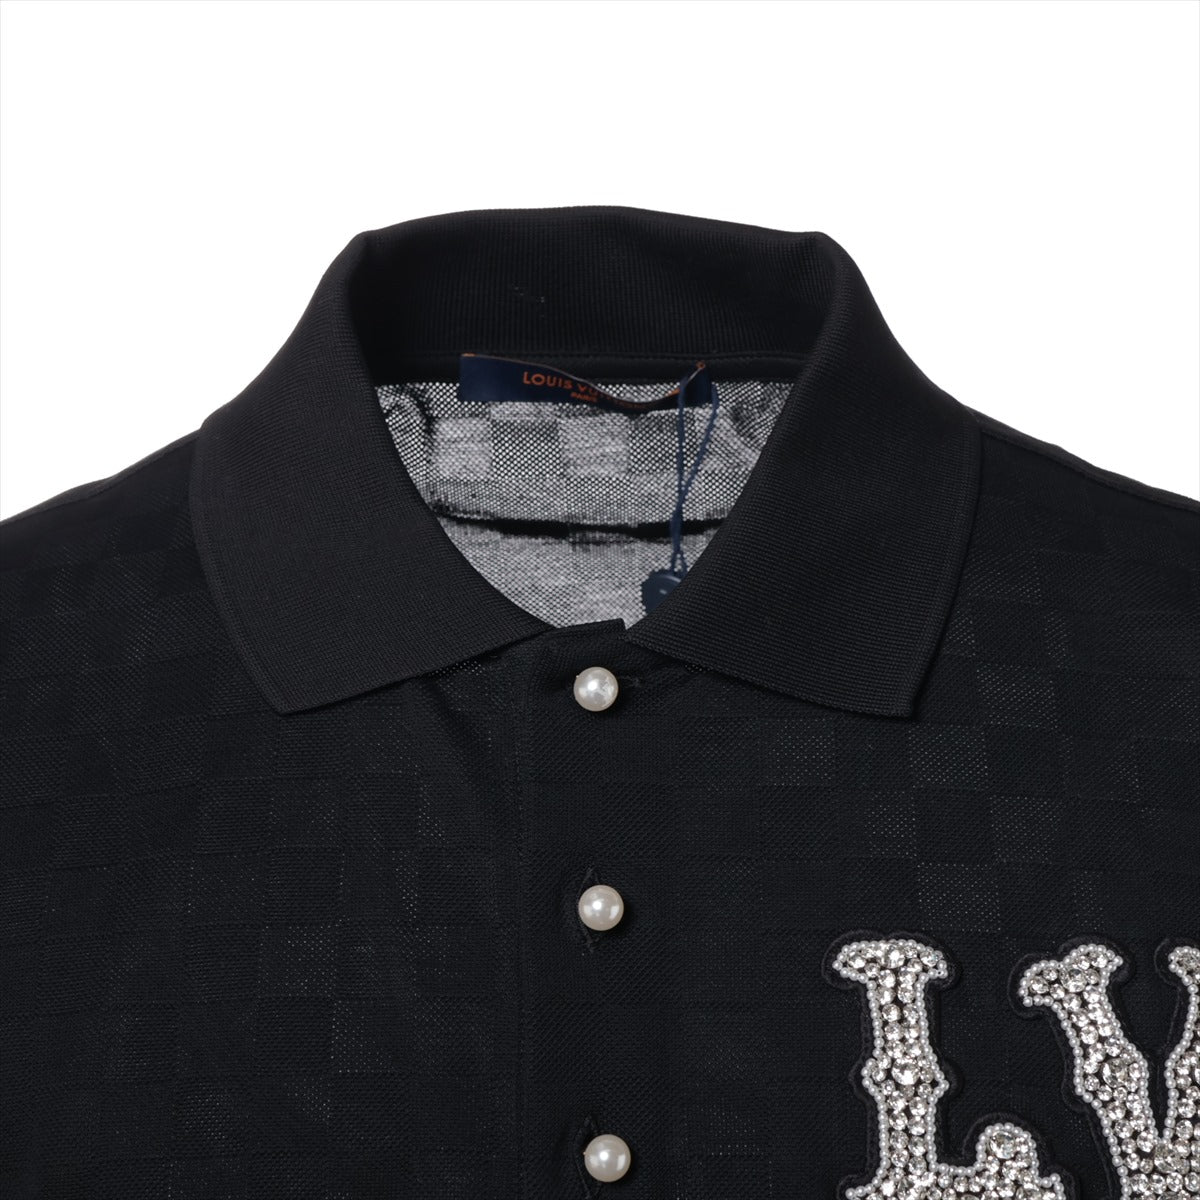 Louis Vuitton 24SS Cotton Polo shirt XL Men's Black  RM241 1AFJEN COTTON PIQUE POLO WITH EMBROIDED LV PATCH